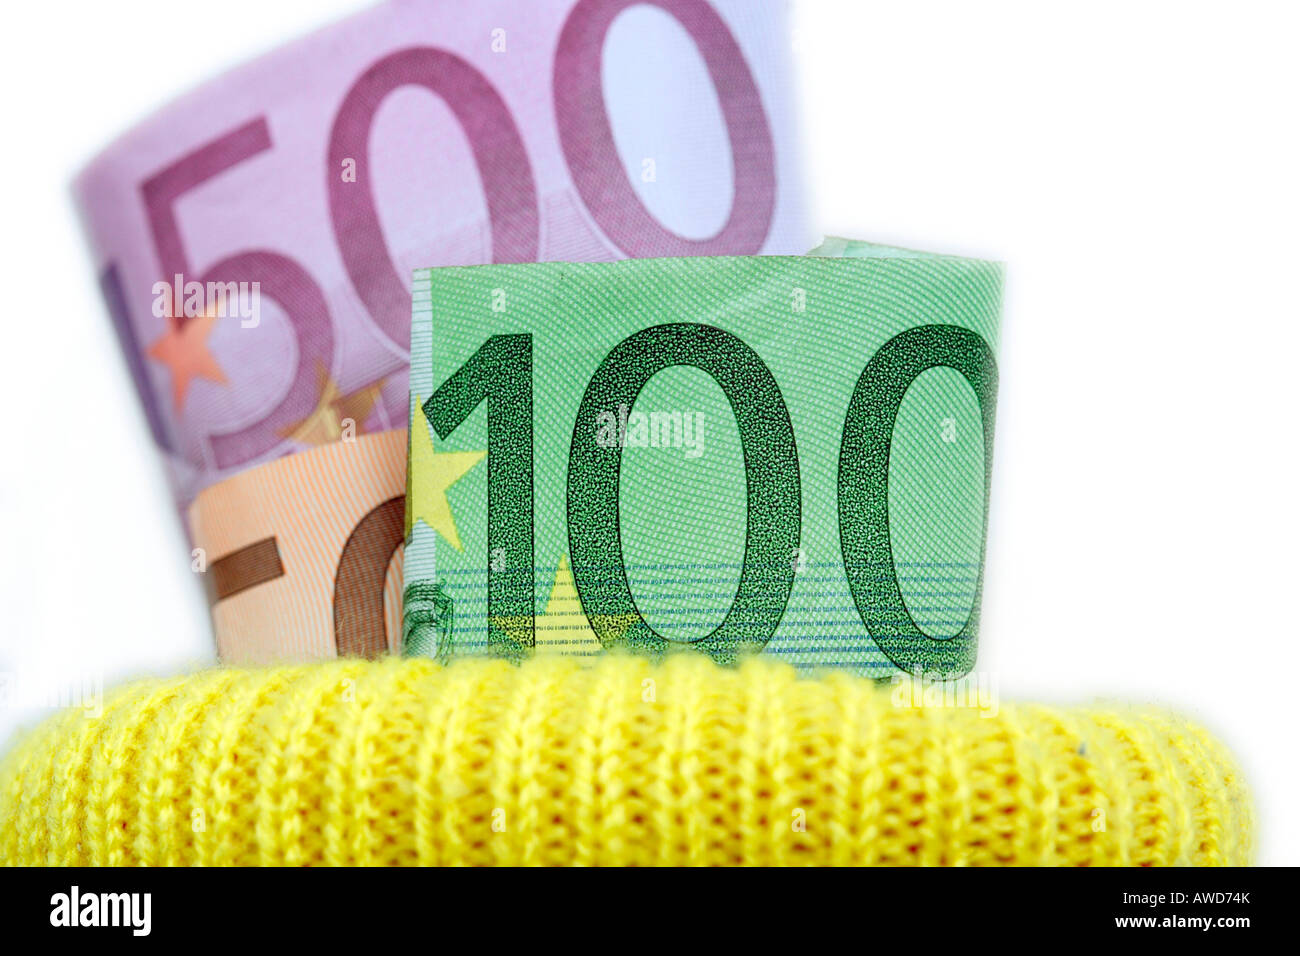 Saving money - Euro bank notes put into a yellow sock deposit Stock Photo